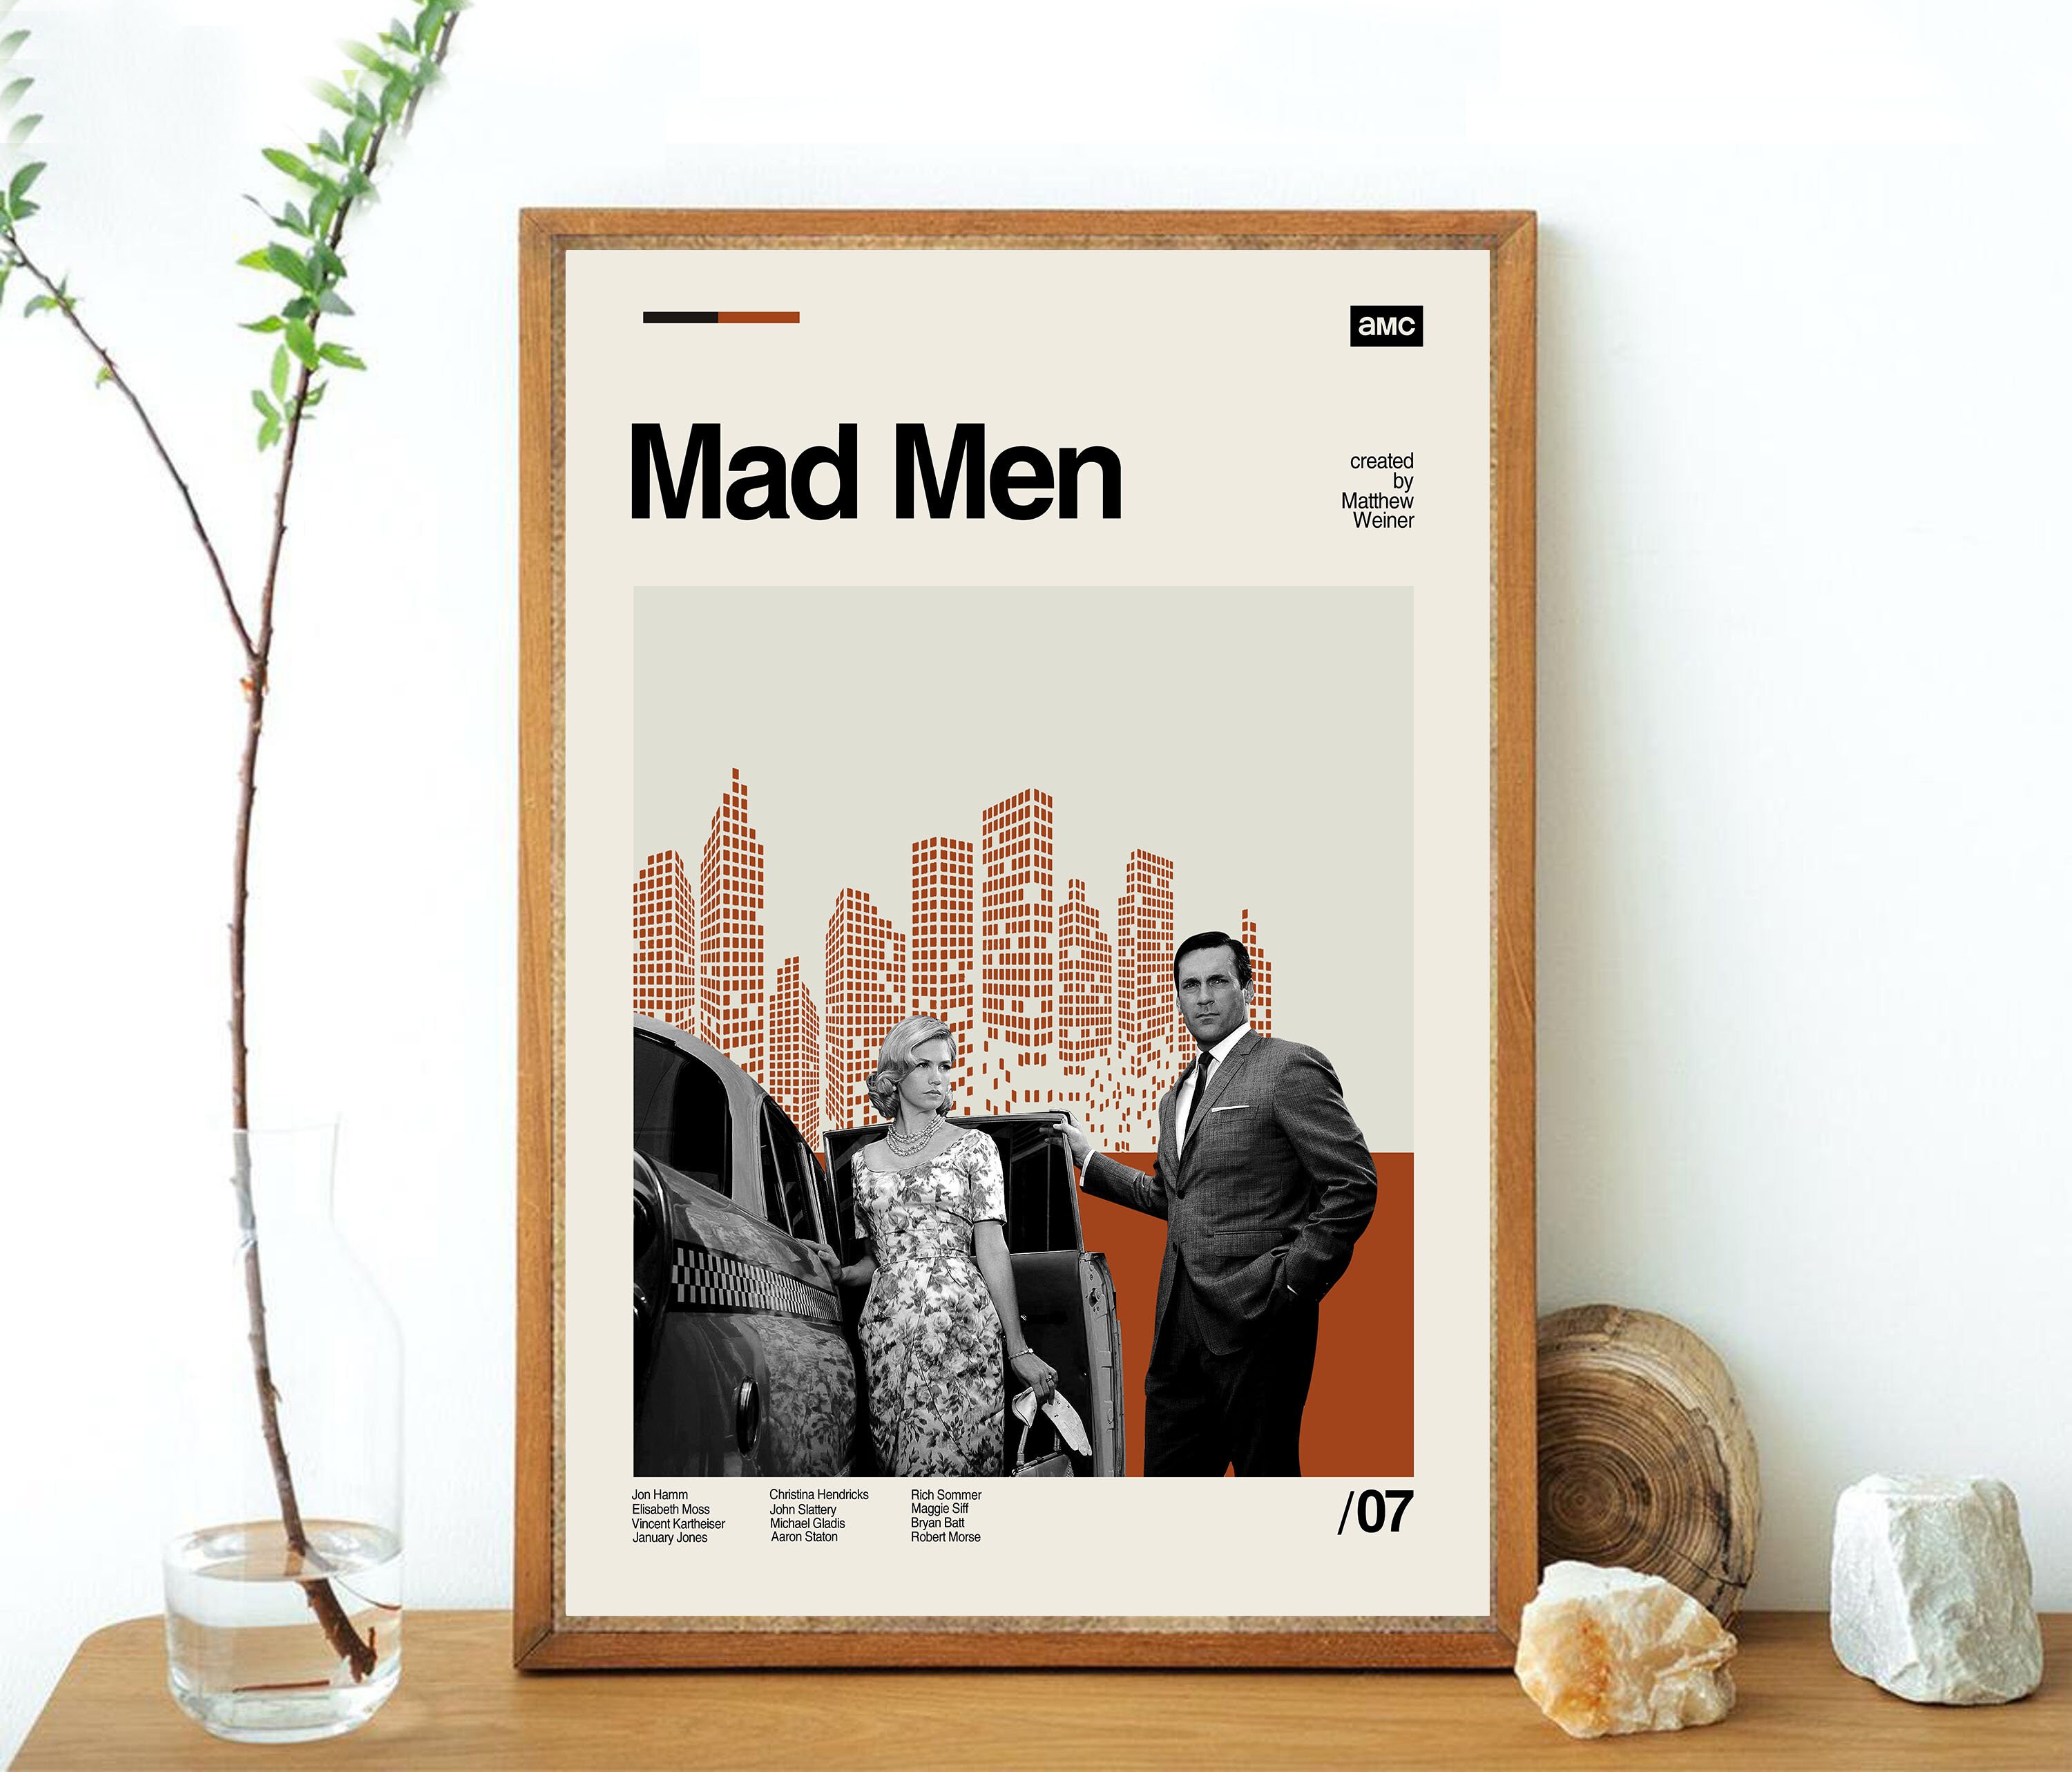 MAD MEN - Art Print - retro-modern, vintage inspired Poster - Michael Scott - Abstract Minimalist - Free Shipping